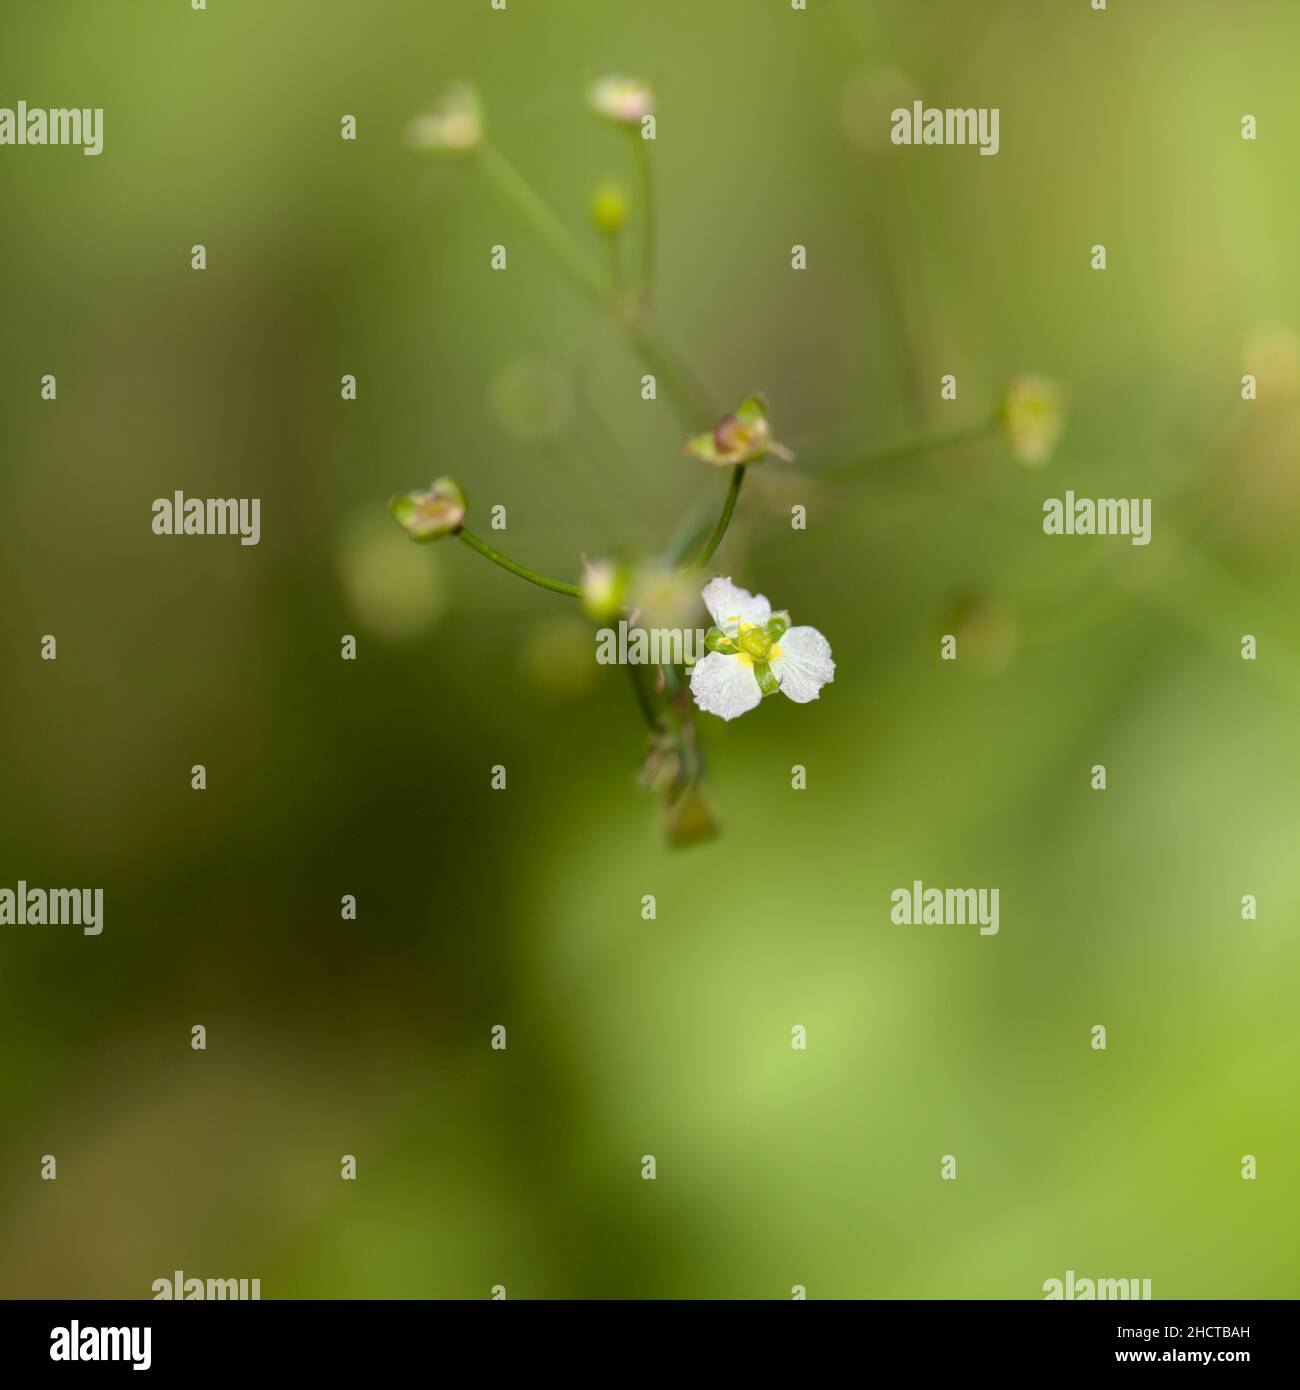 White flower of Alisma plantago-aquatica, European water-plantain, natural macro floral background Stock Photo